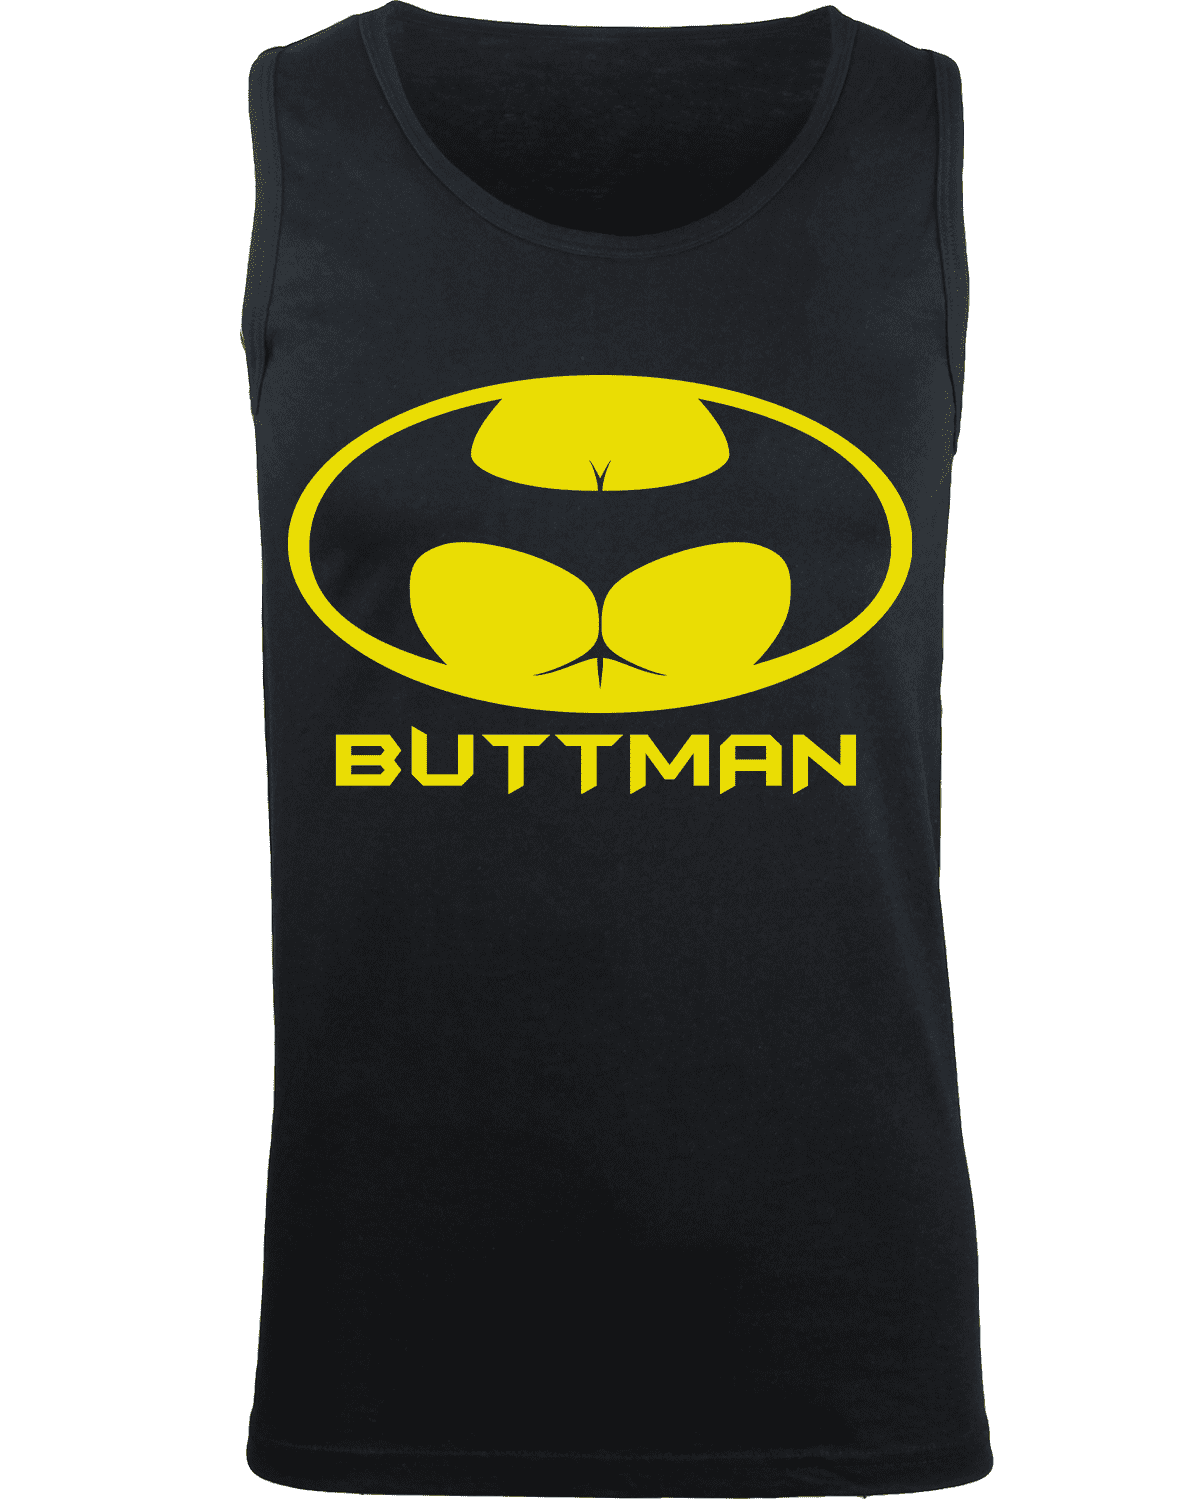 Shirtbanc Inner Superhero Mens Buttman Hilarious Shirt Funny Parody Design Tee